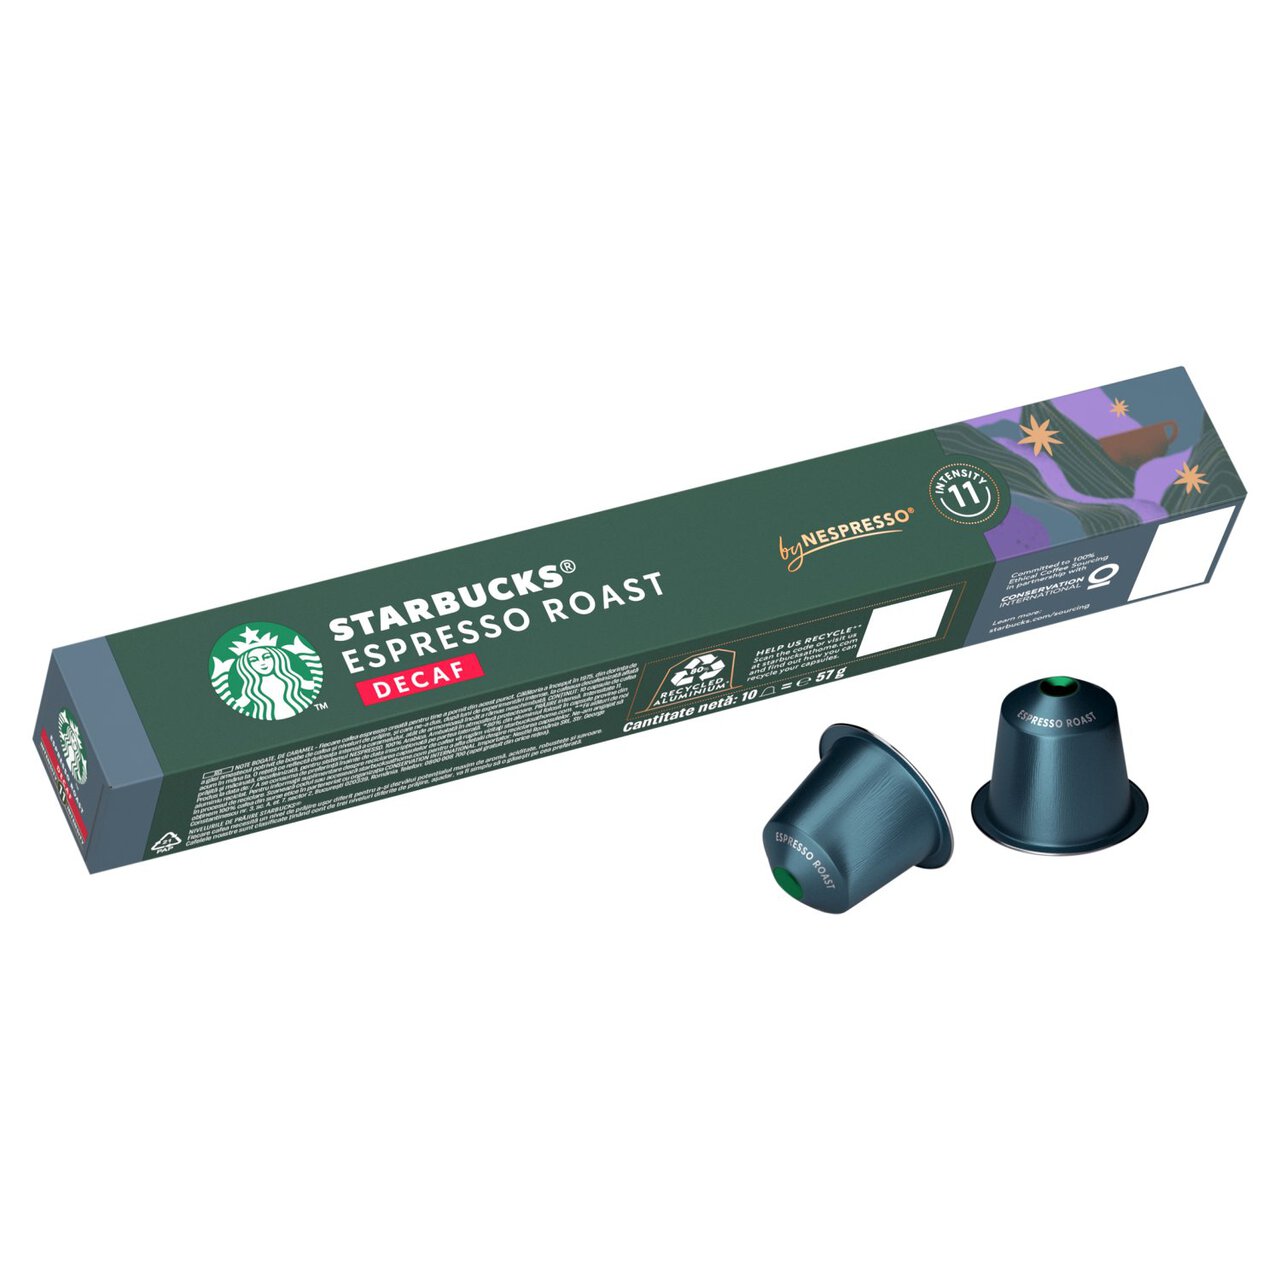 Starbucks by Nespresso Decaf Espresso Roast Coffee Pods 10 per pack